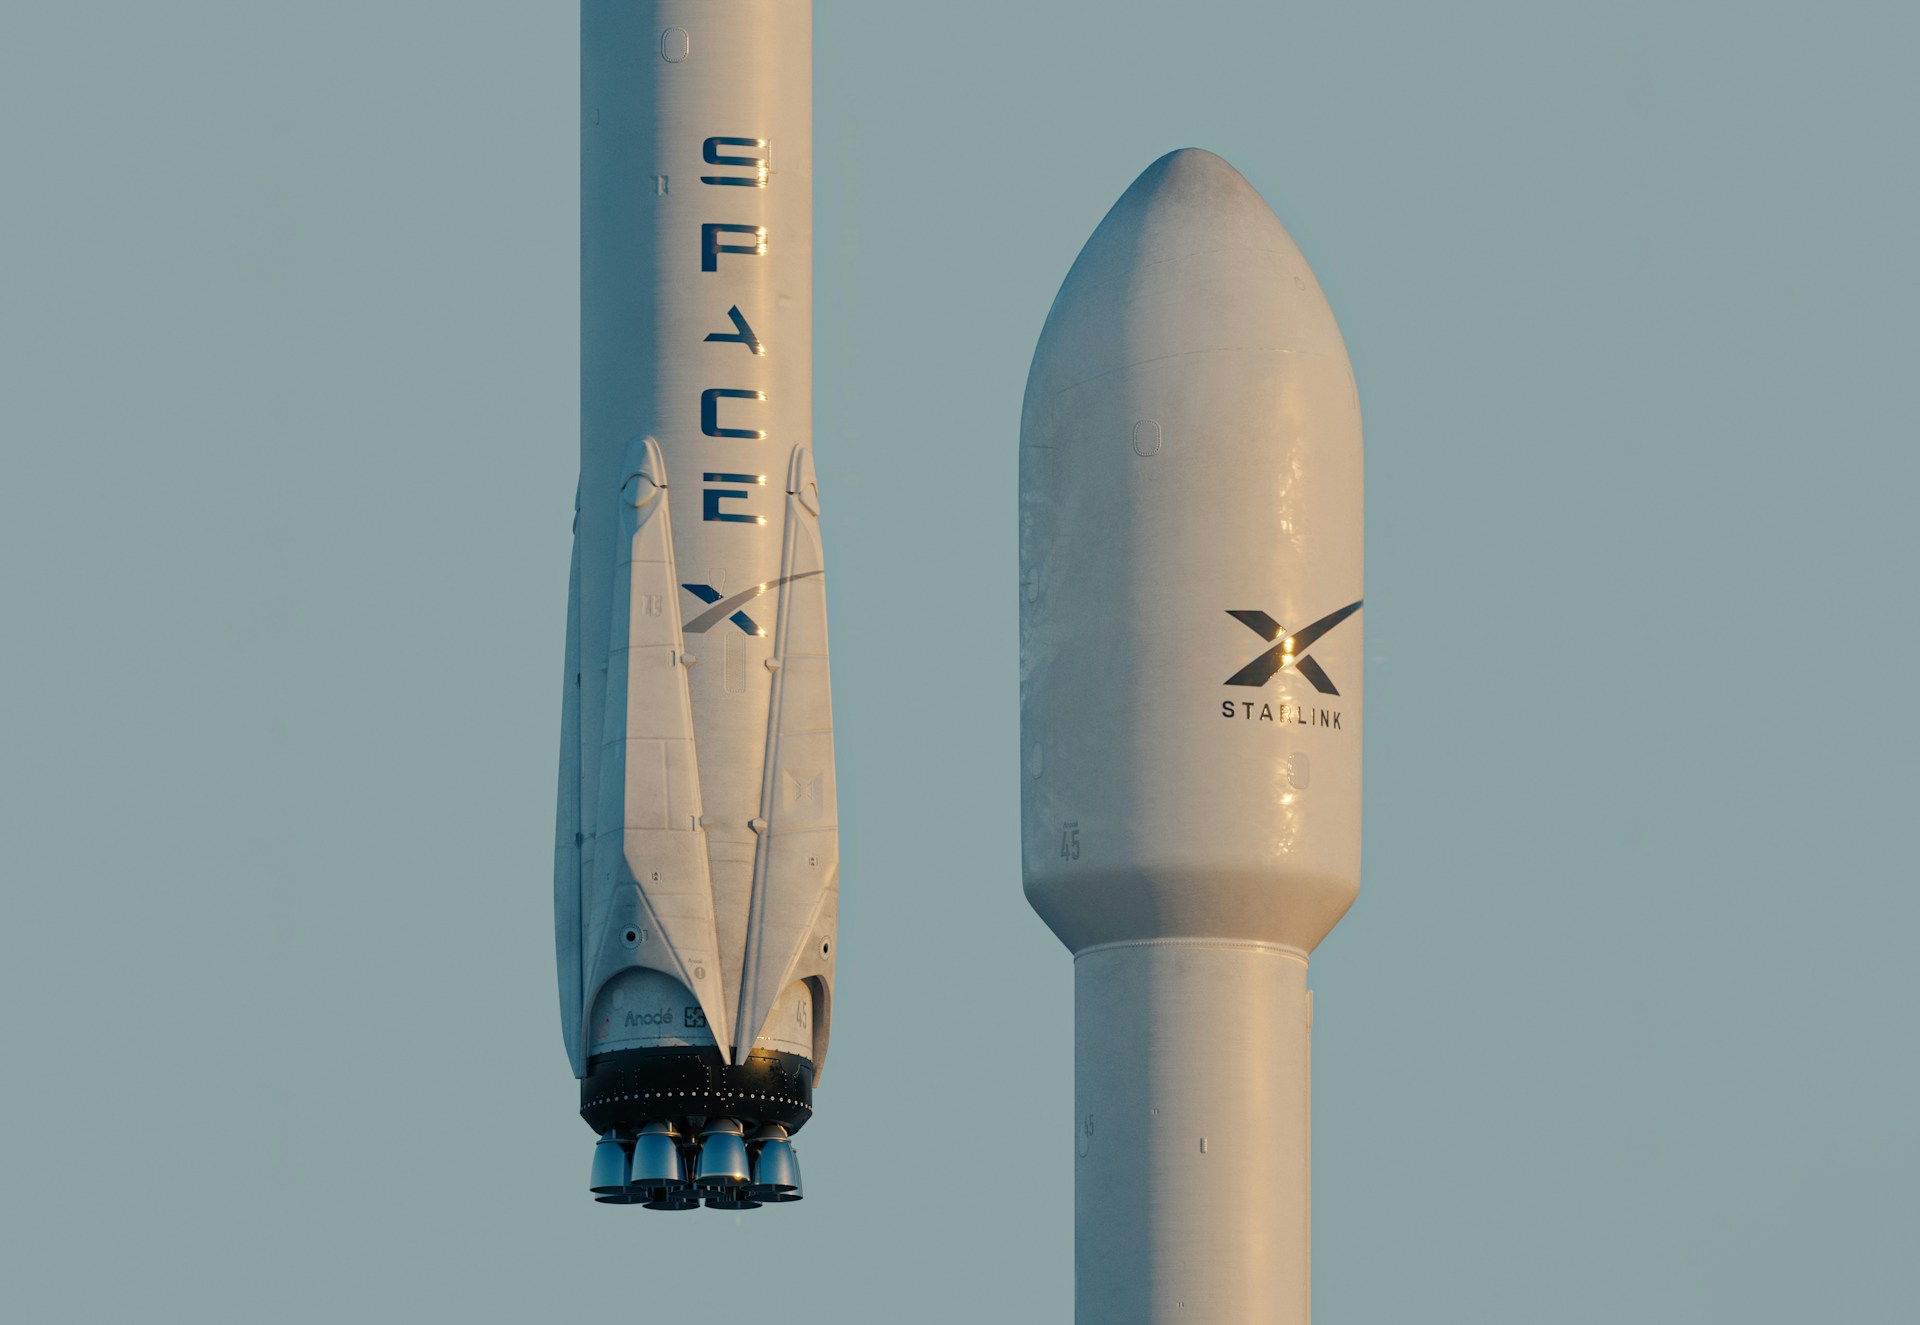 SpaceX's Starlink rockets